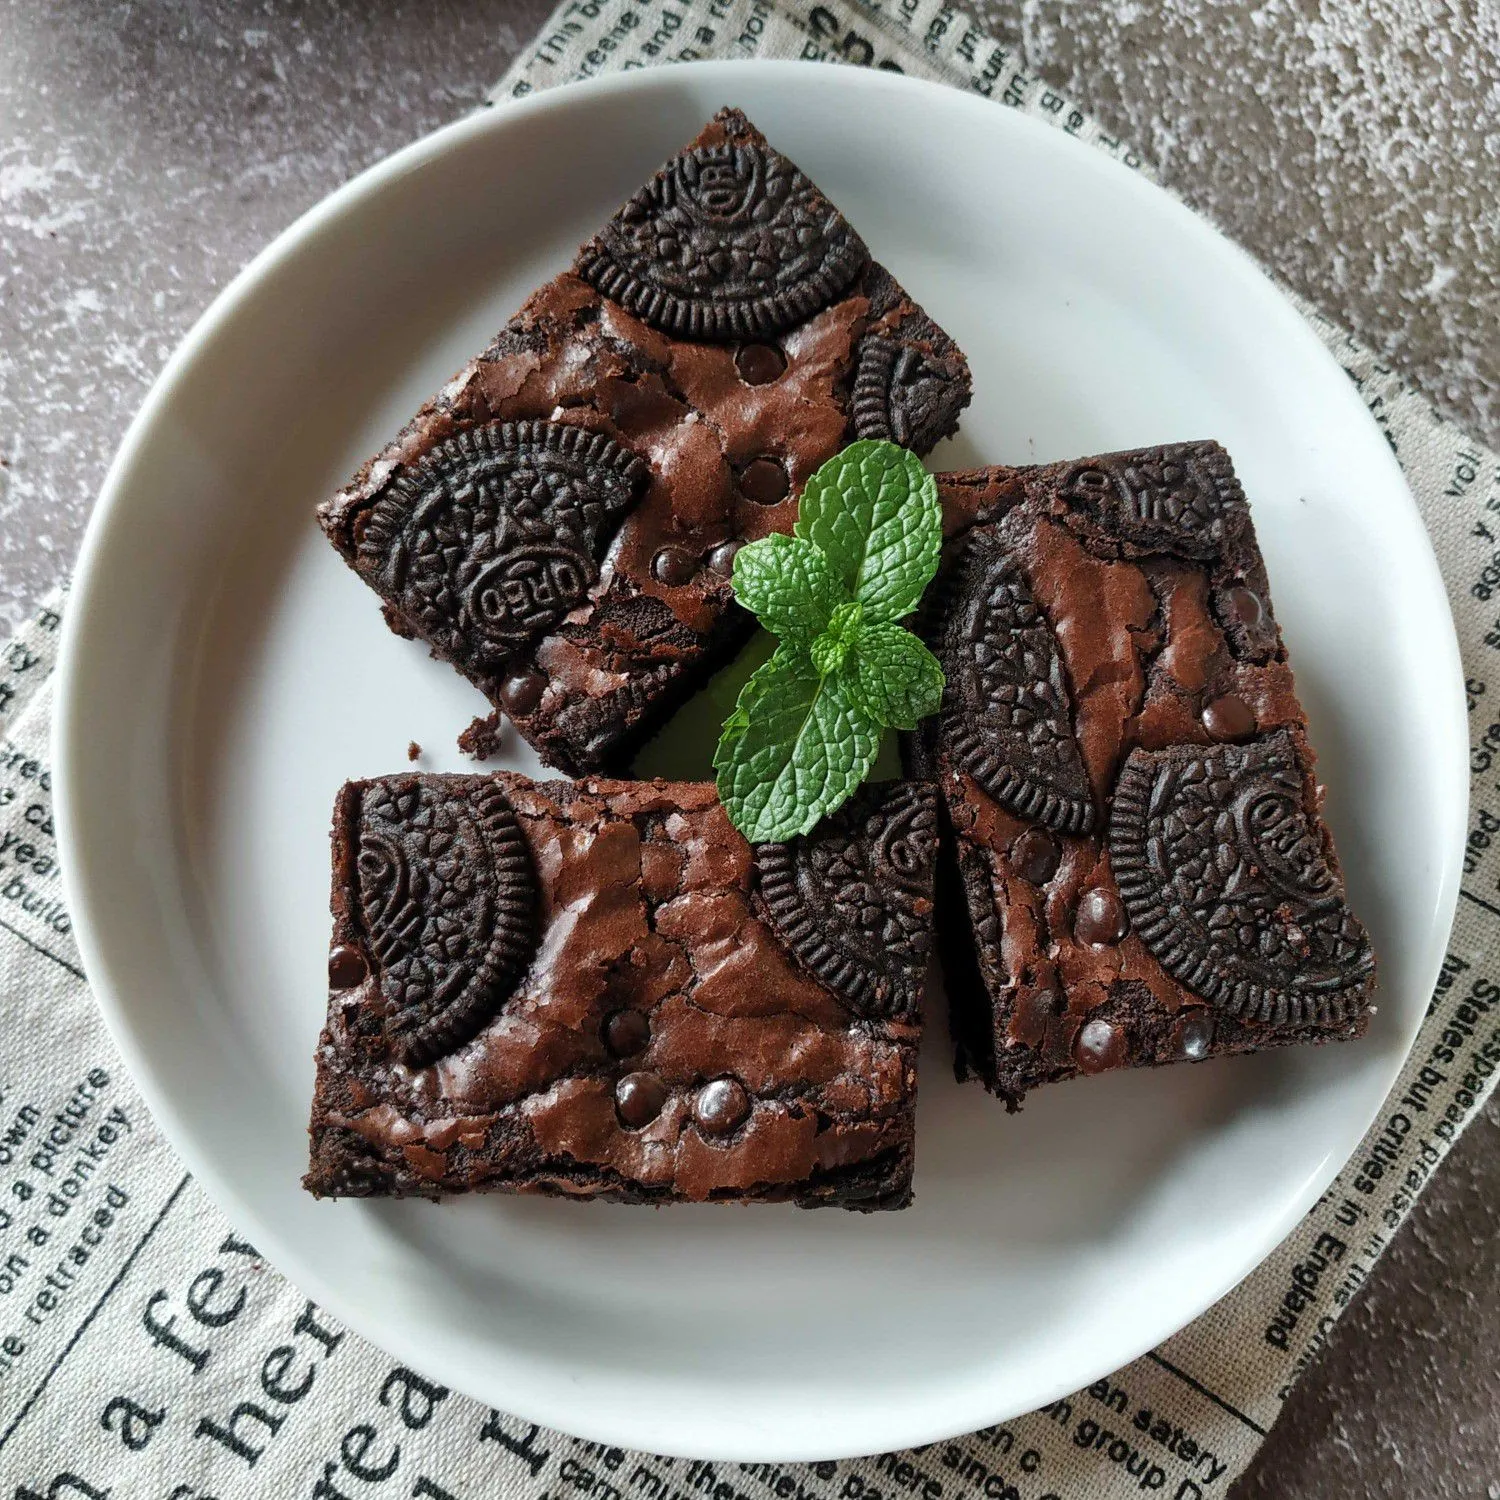 Brownies Oreo #JagoMasakMinggu3Periode3